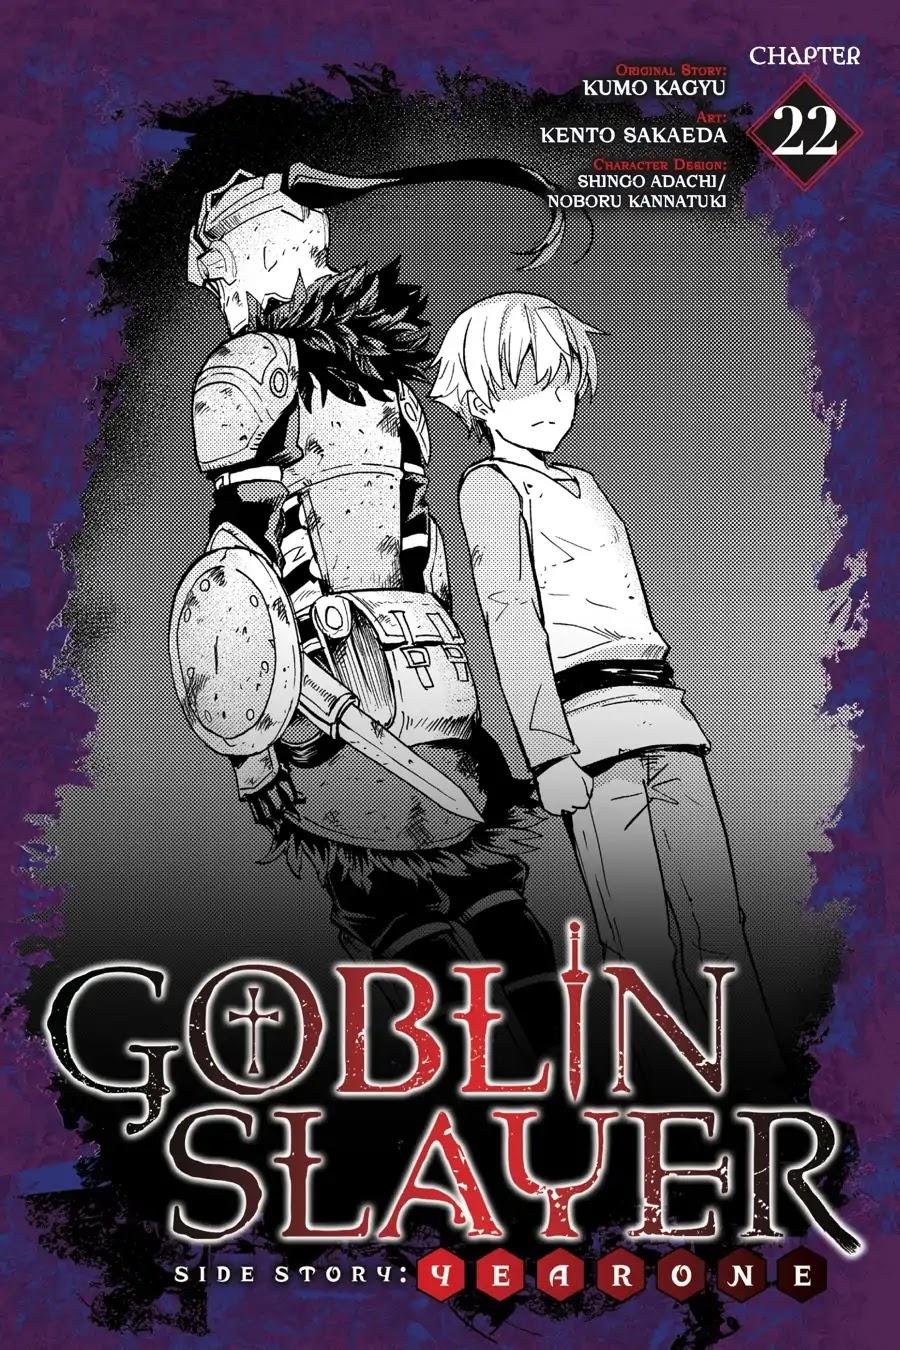 Goblin Slayer Side Story Year One Manga Volume 8